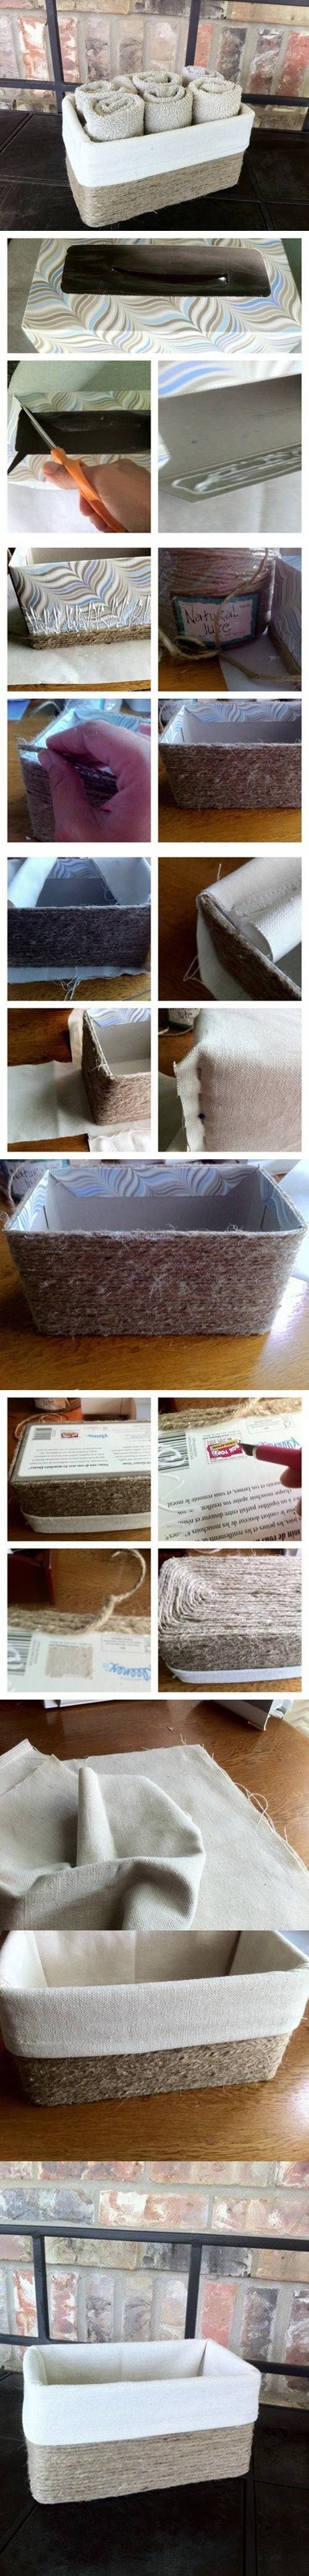 DIY Jute Basket from Cardboard Box